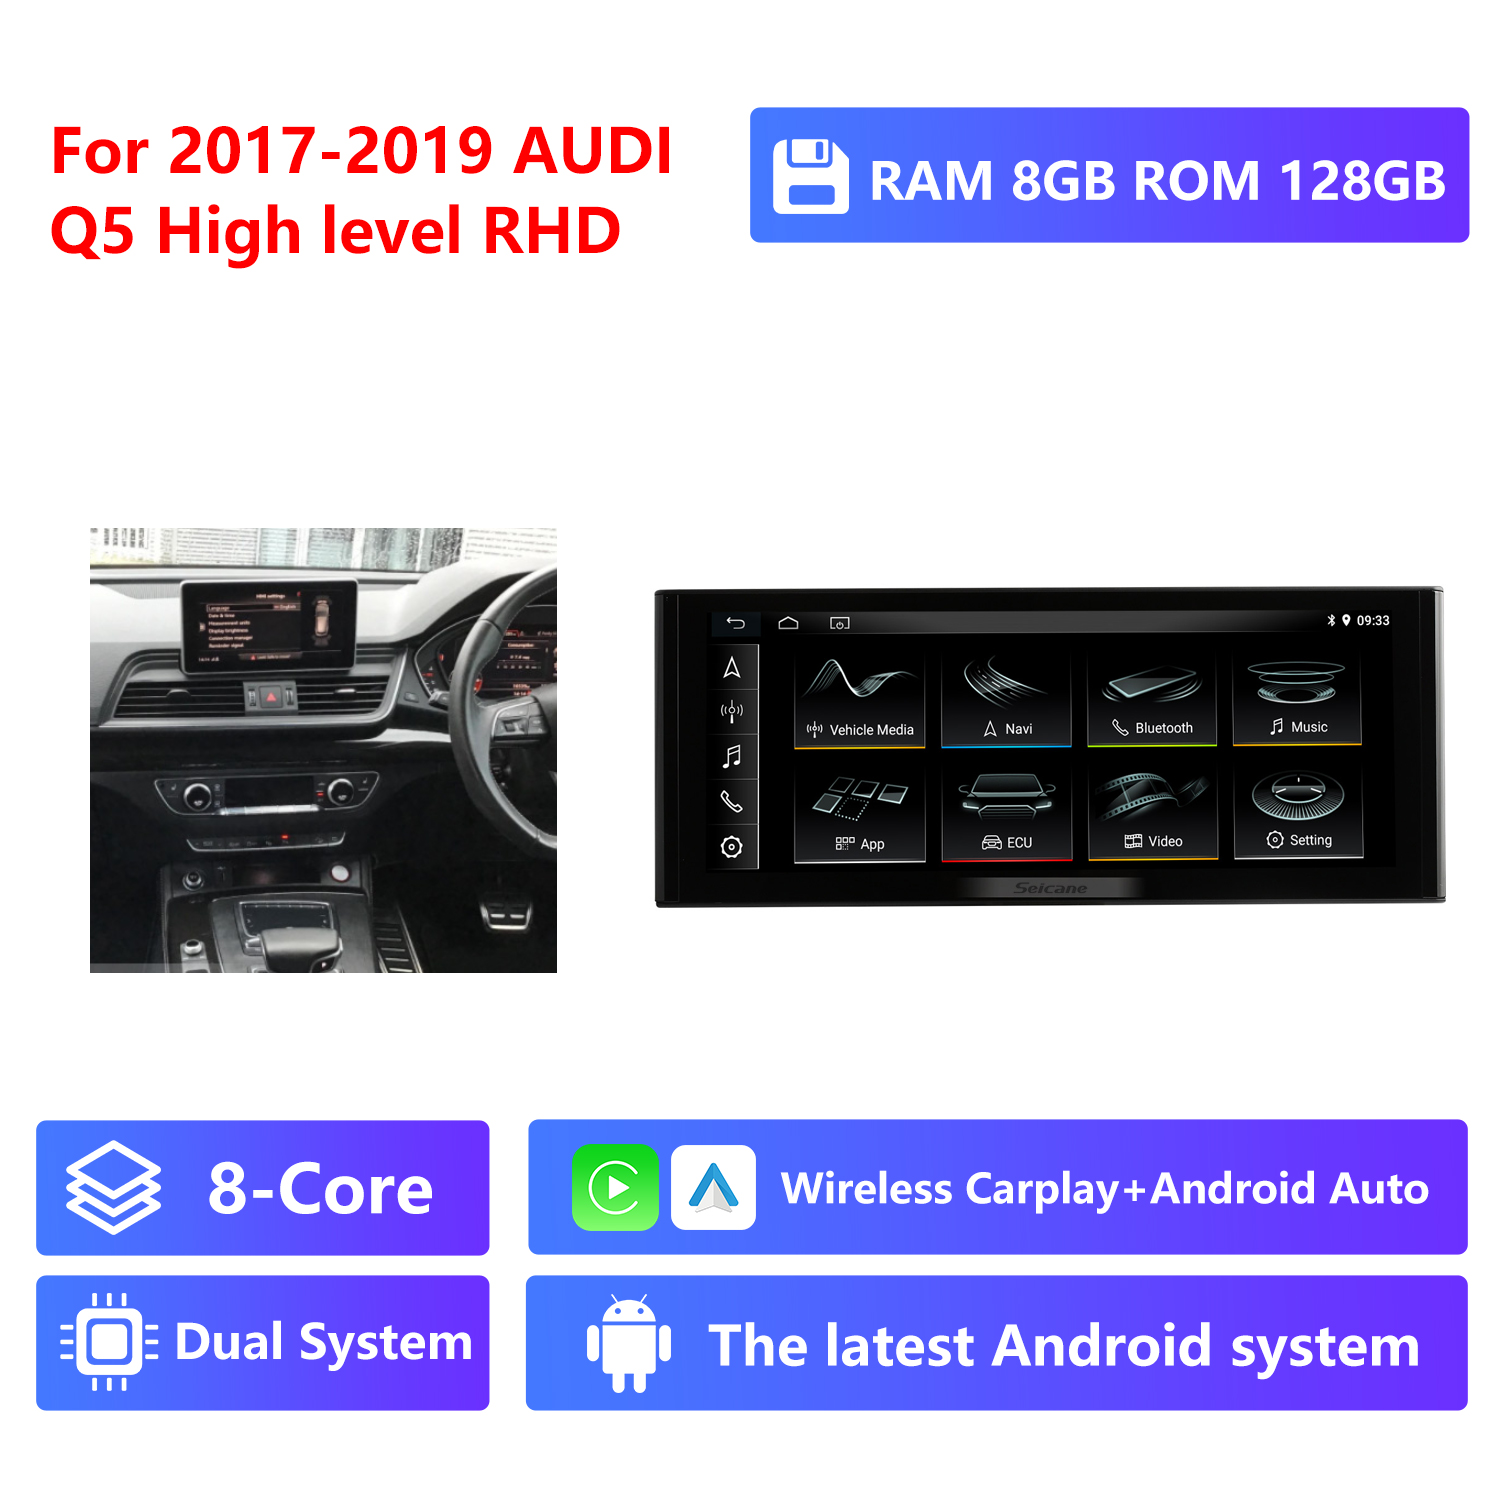 8-Core RAM 8G ROM 128G,2017-2019,High version,RHD